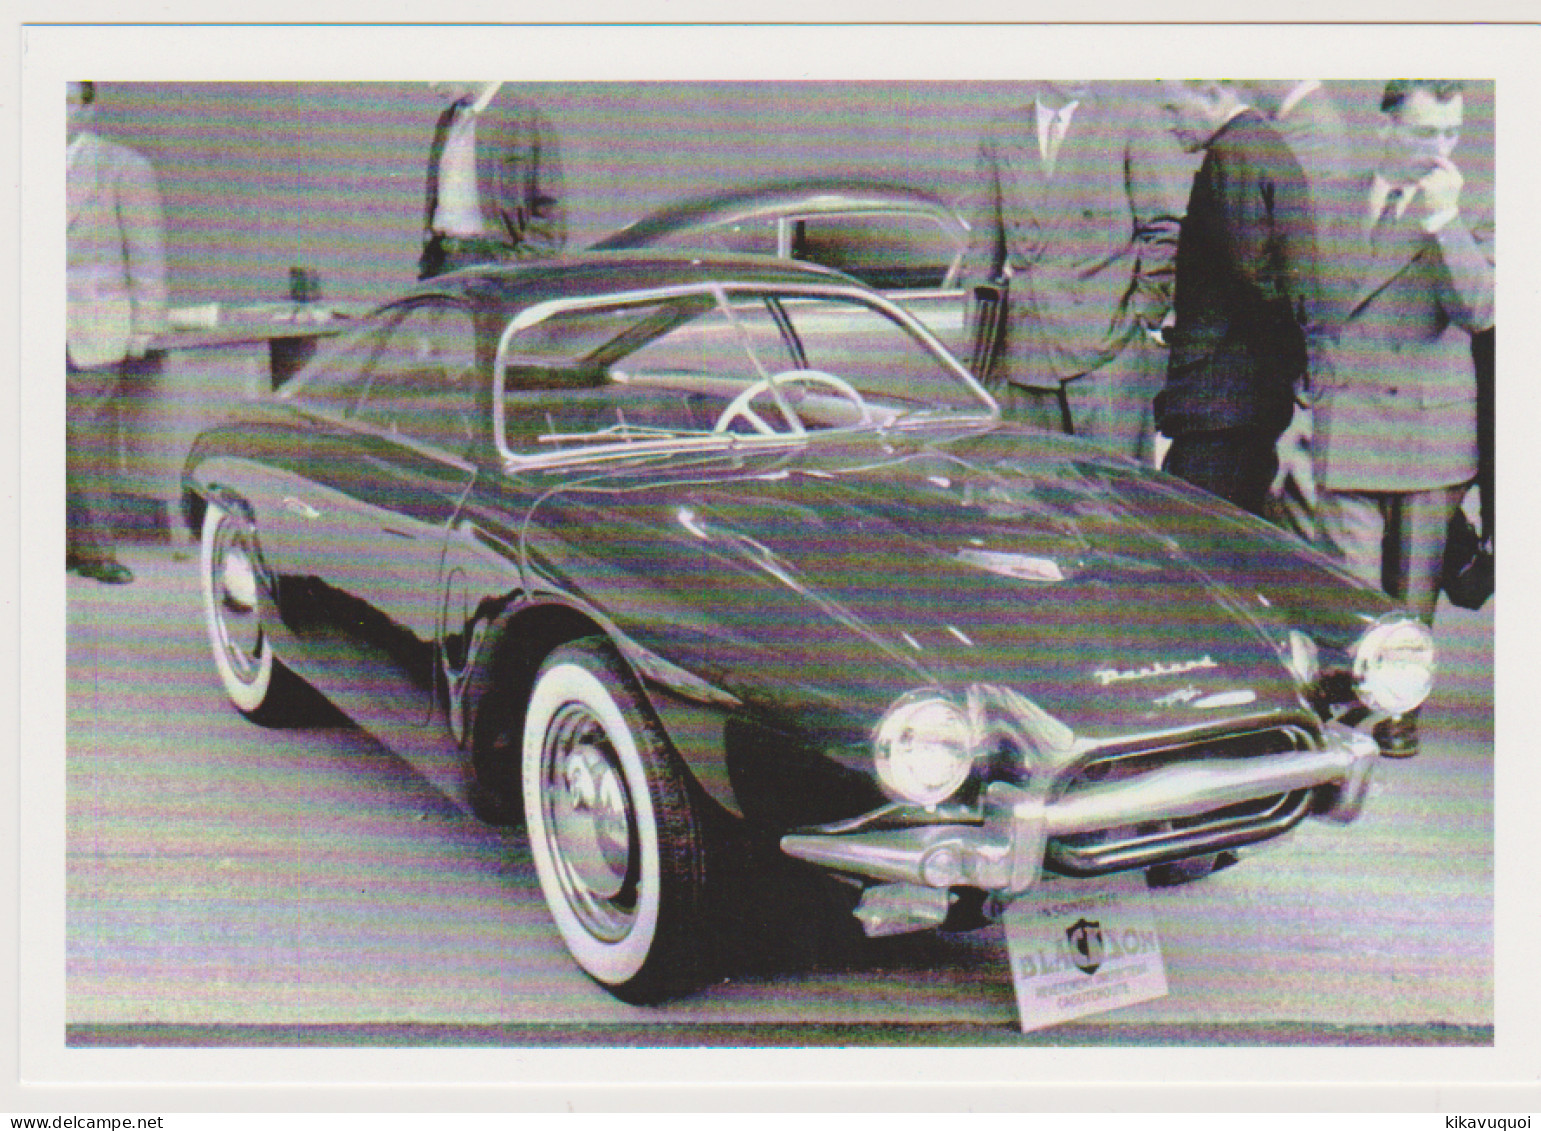 PANHARD DOLOMITE DE 1953 - CARTE POSTALE 10X15 CM NEUF - Moto